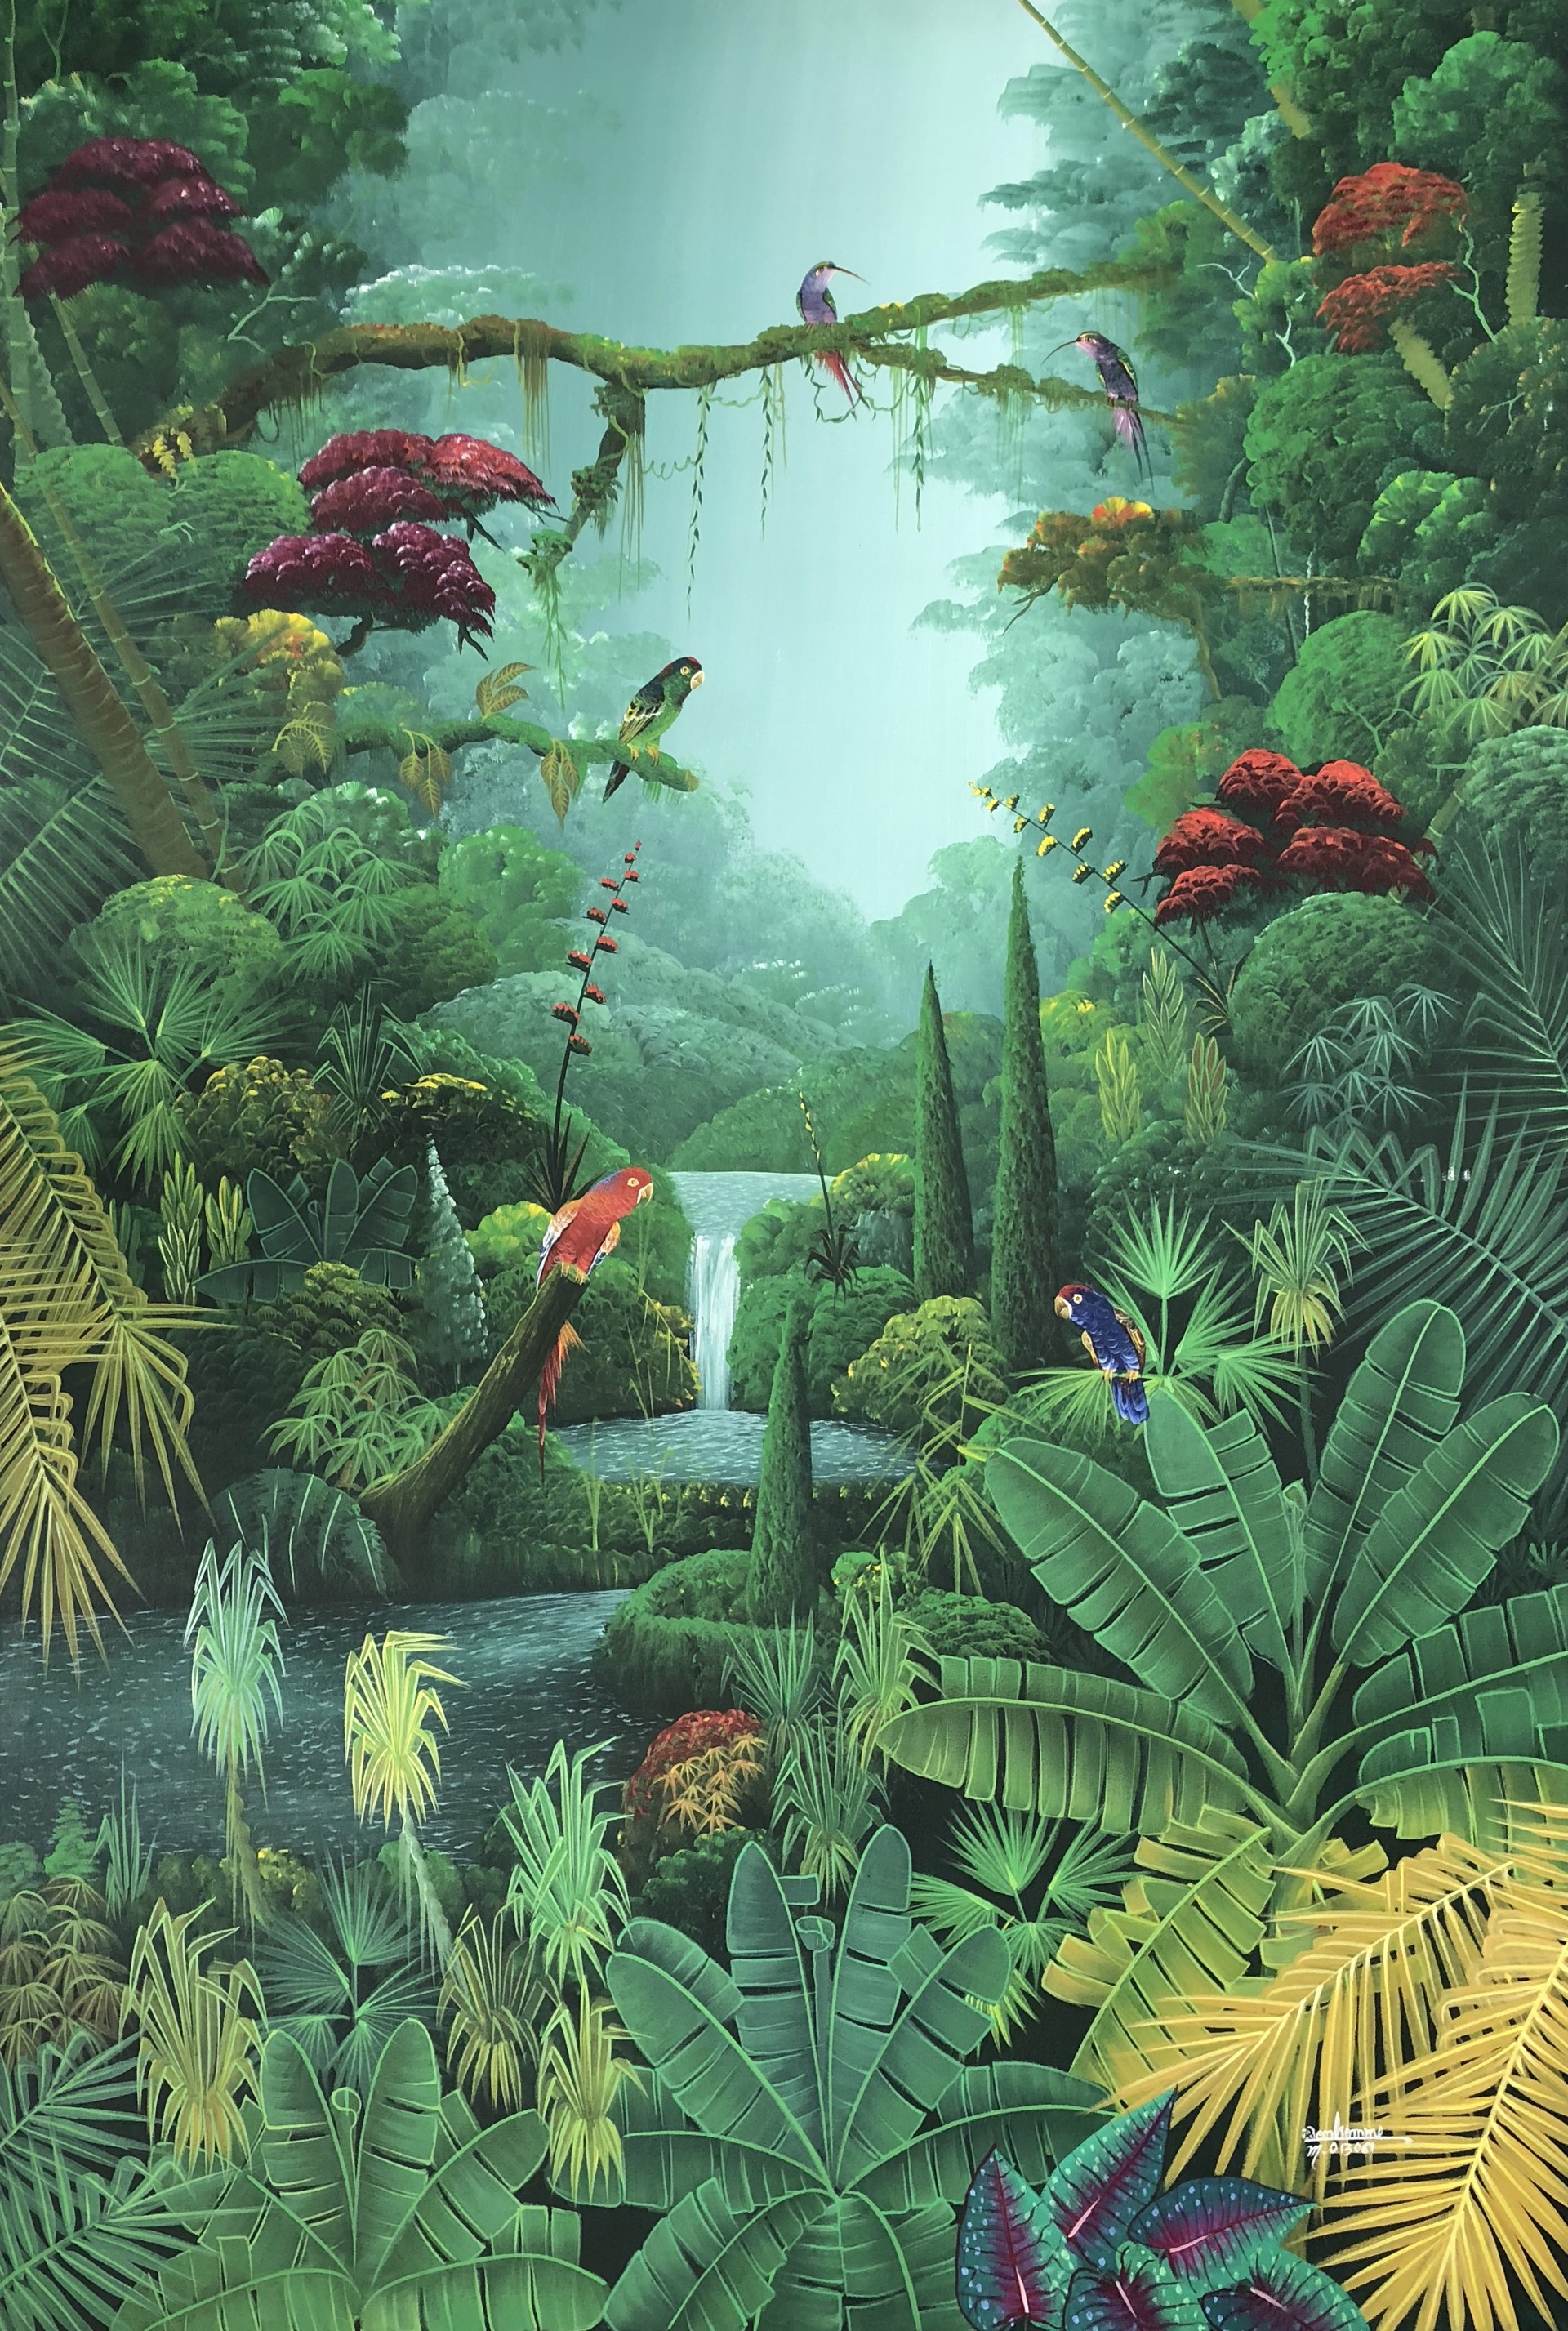 Birds & Vegetation#2878 by Albott Bonhomme (Haitian, b. 1963)